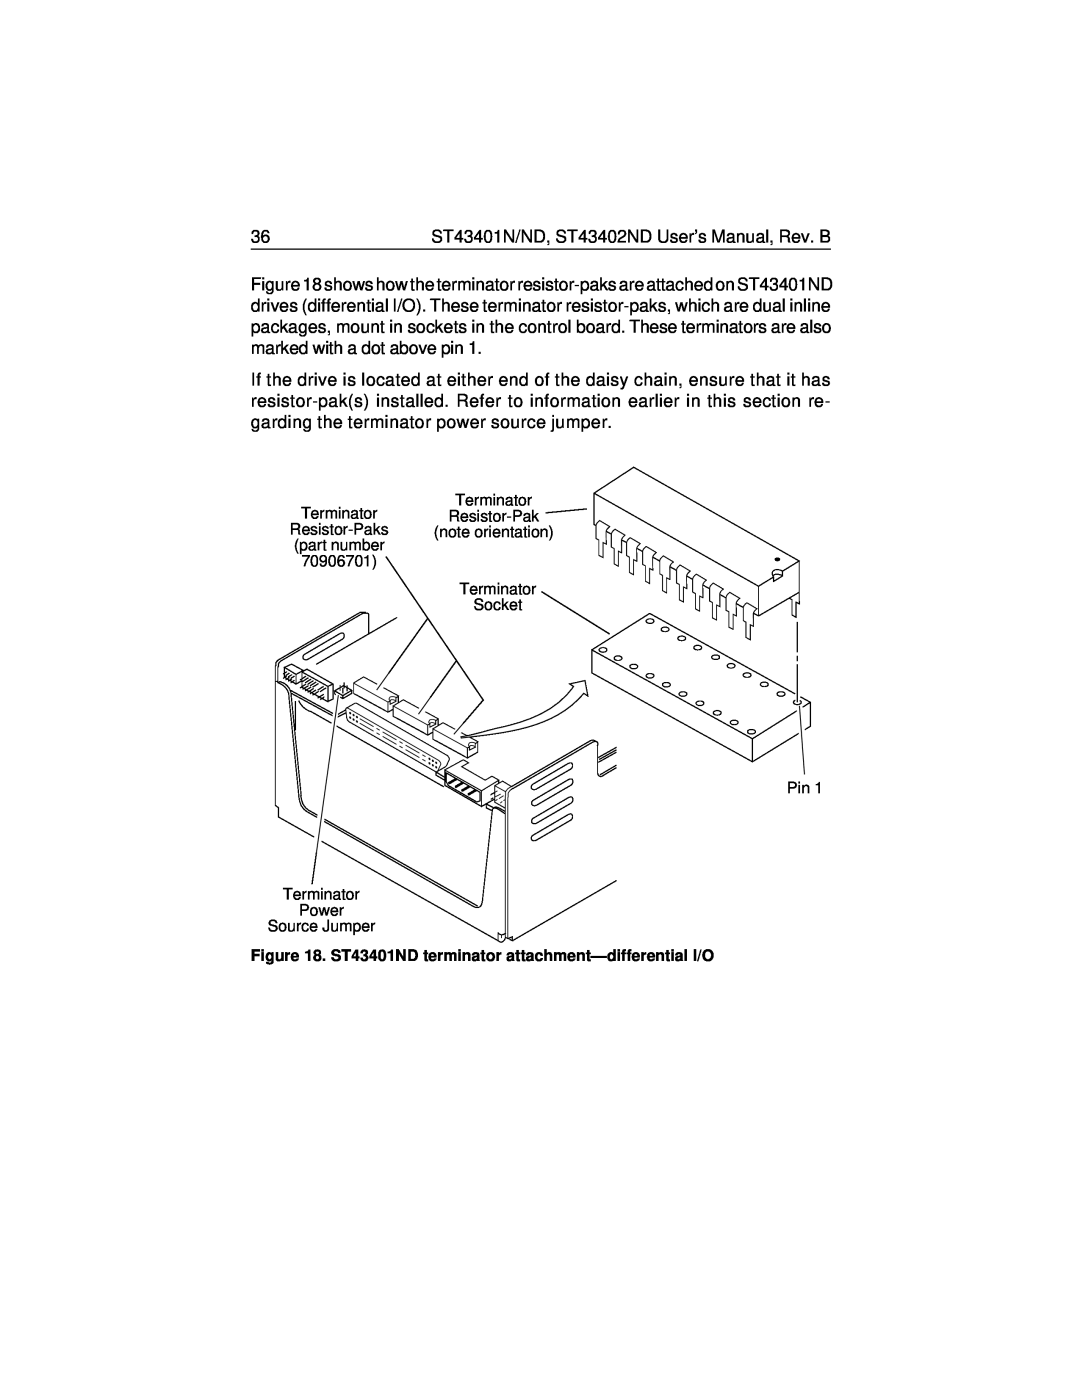 Seagate ST43402ND, ST43401N/ND user manual Terminator Resistor-Paks part number 70906701 Terminator Power, Source Jumper 